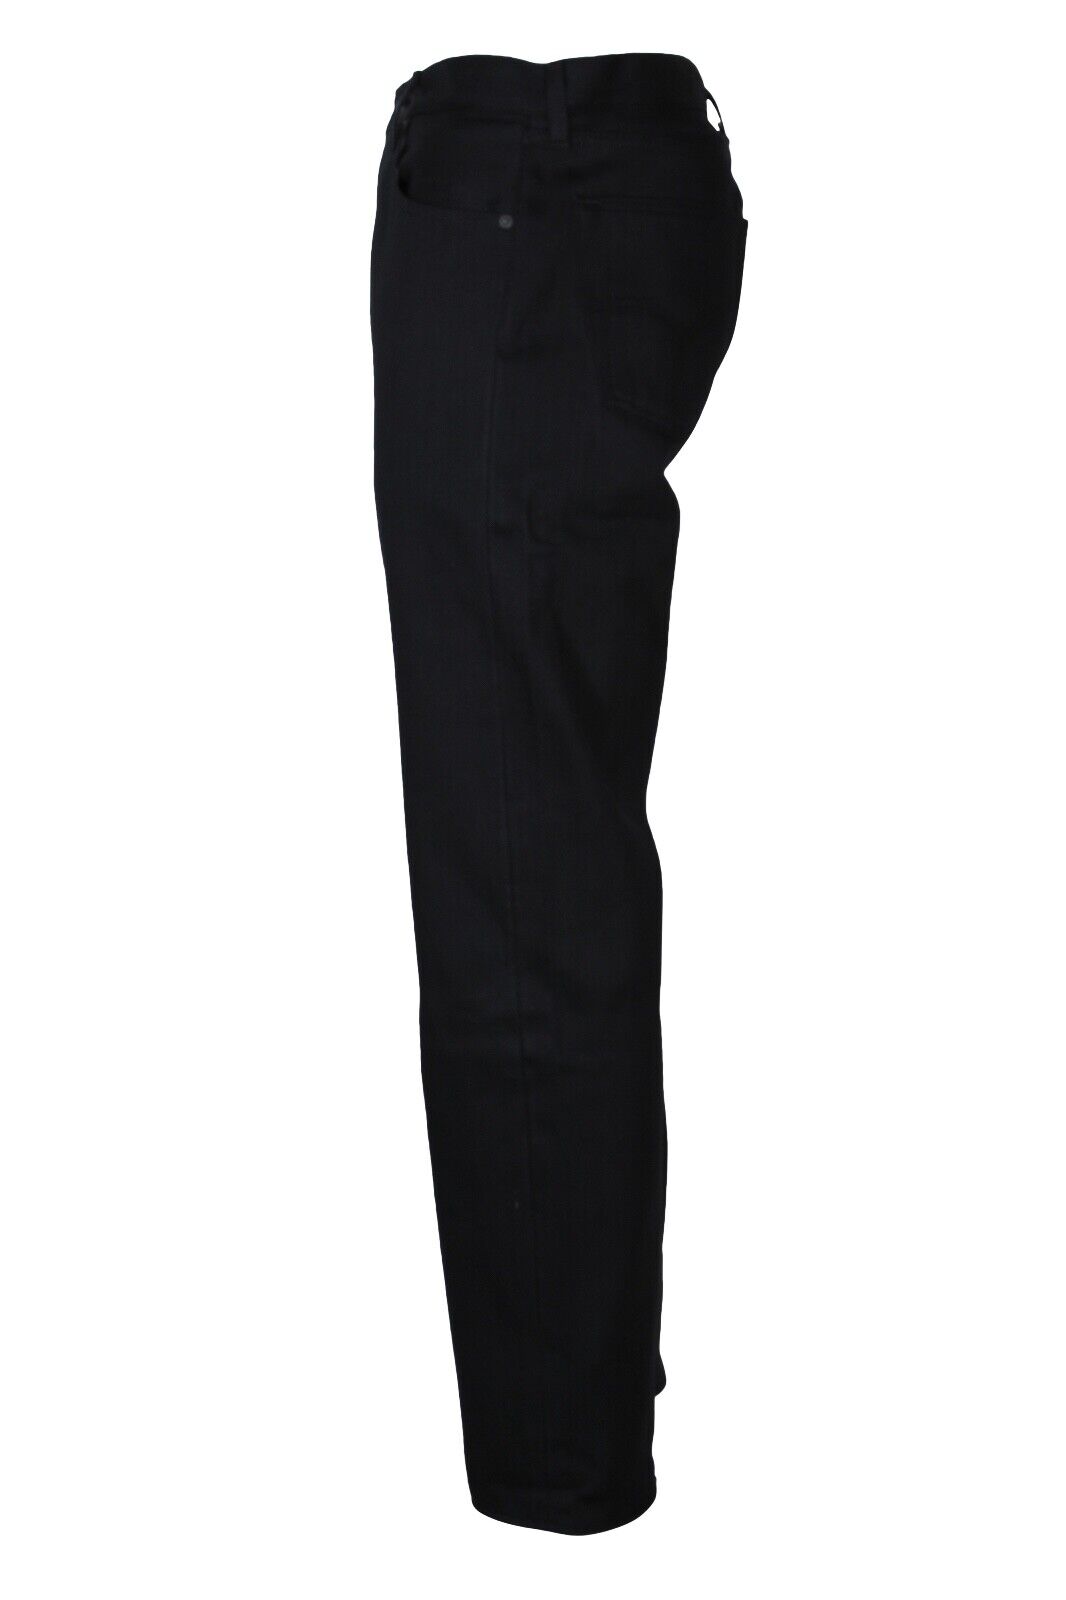 Levi’s 501 Original Shrink-to-Fit Men's Jeans in Modern Black Style# 00501-1582